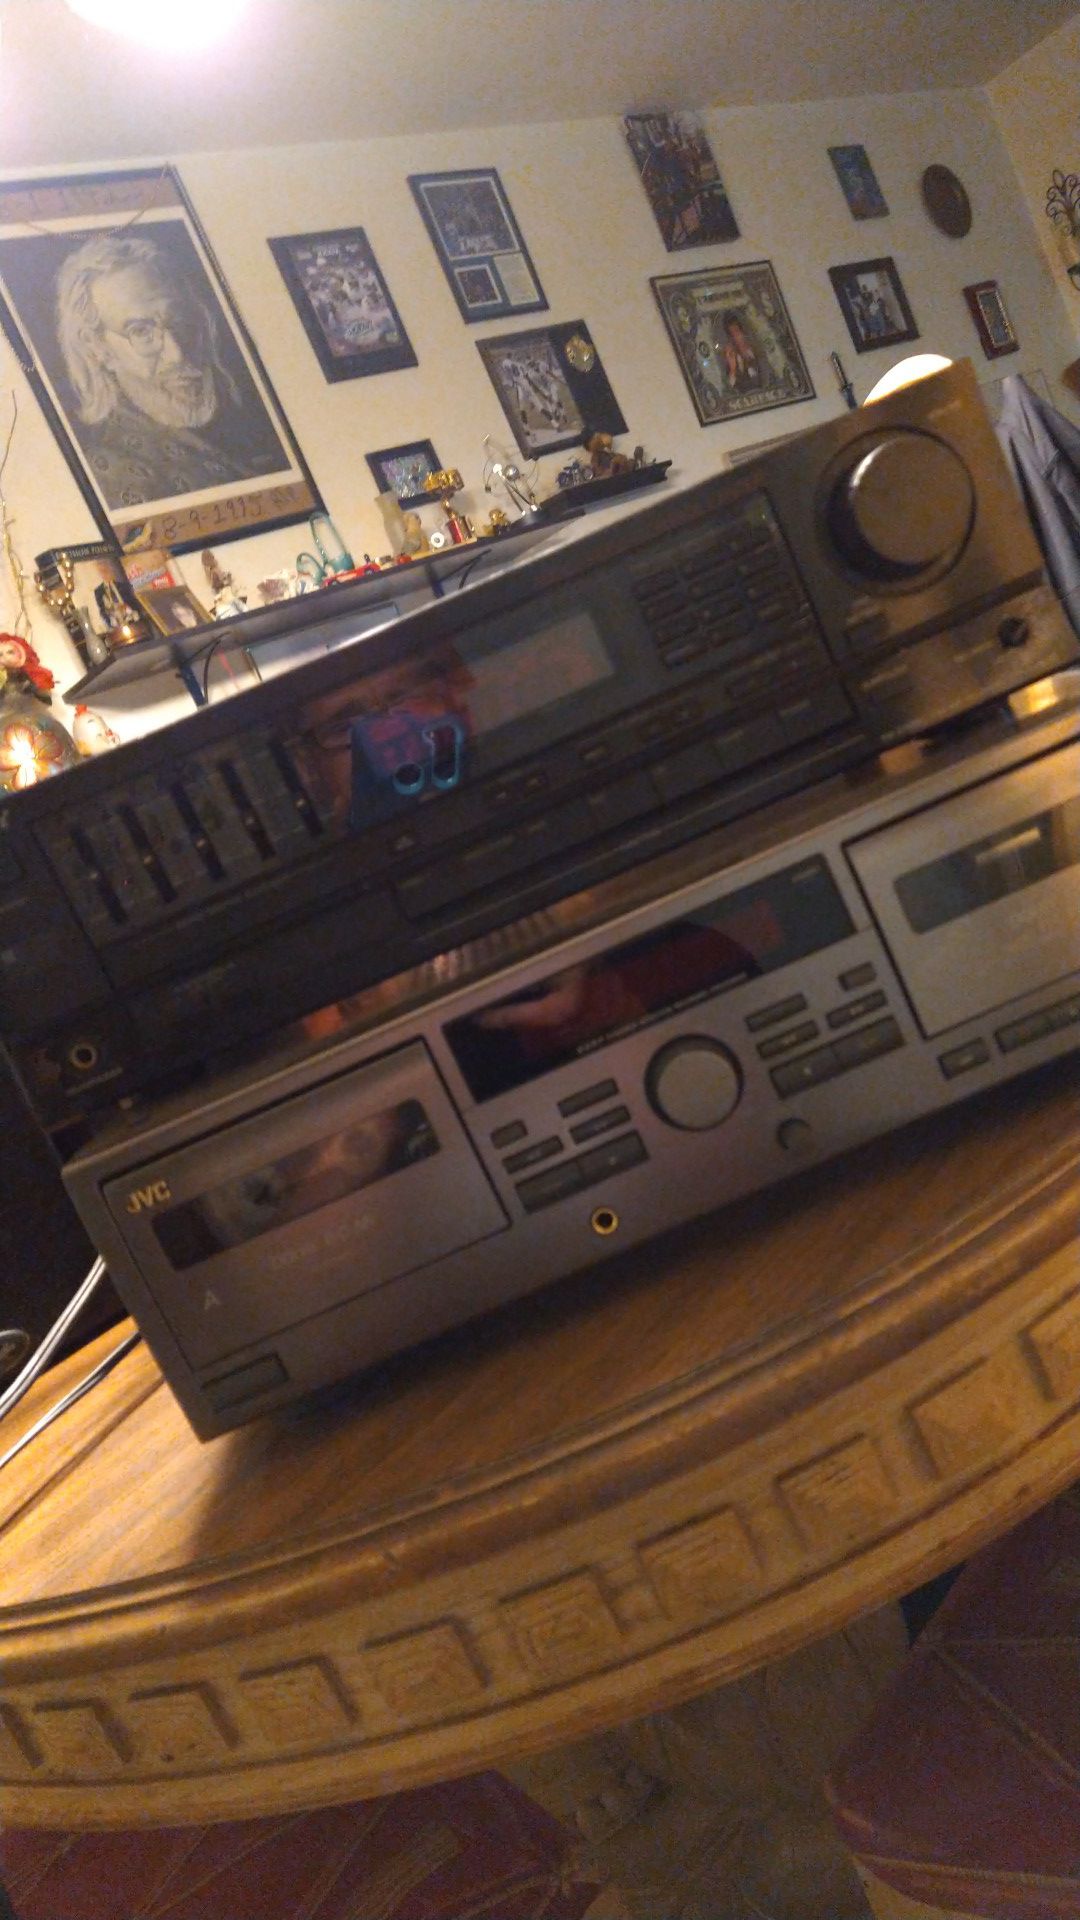 Sony receiver,jvc tape deck with 2 polk audio speakers!!